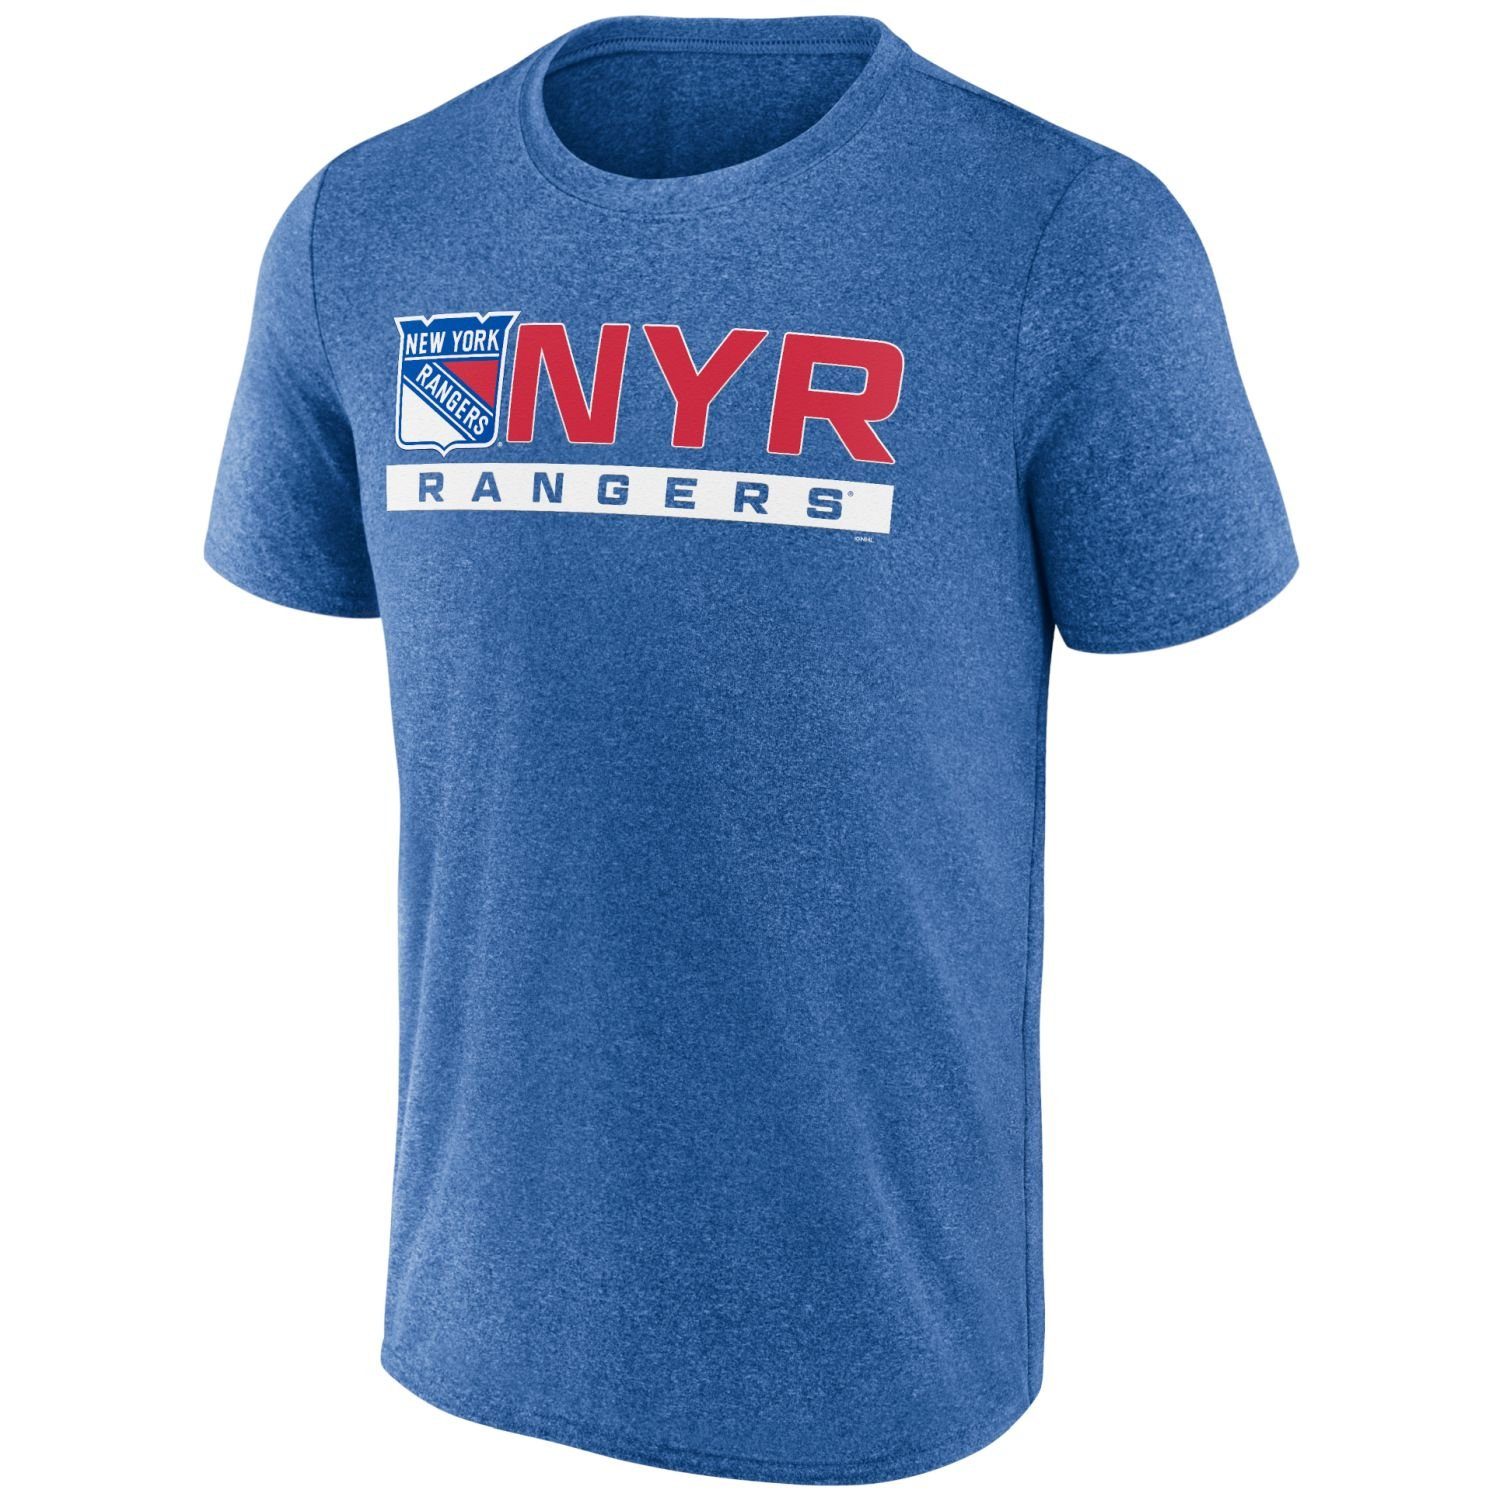 Rangers Print-Shirt Performance ICONIC New York NHL Fanatics